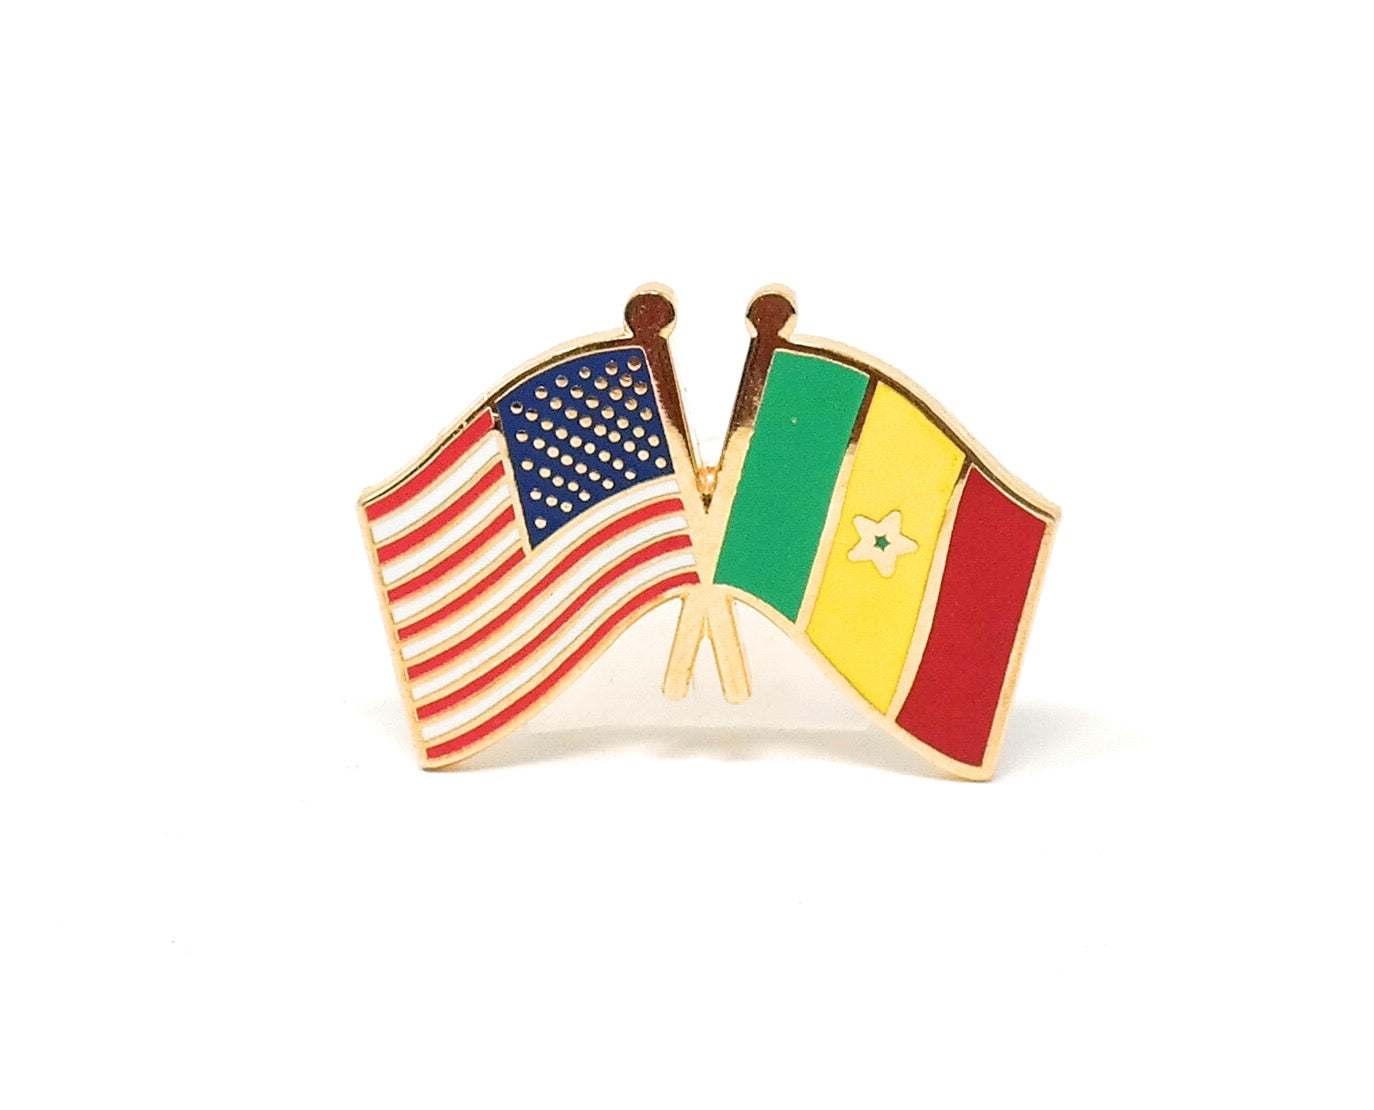 Senegal & USA Friendship Flags Lapel Pin